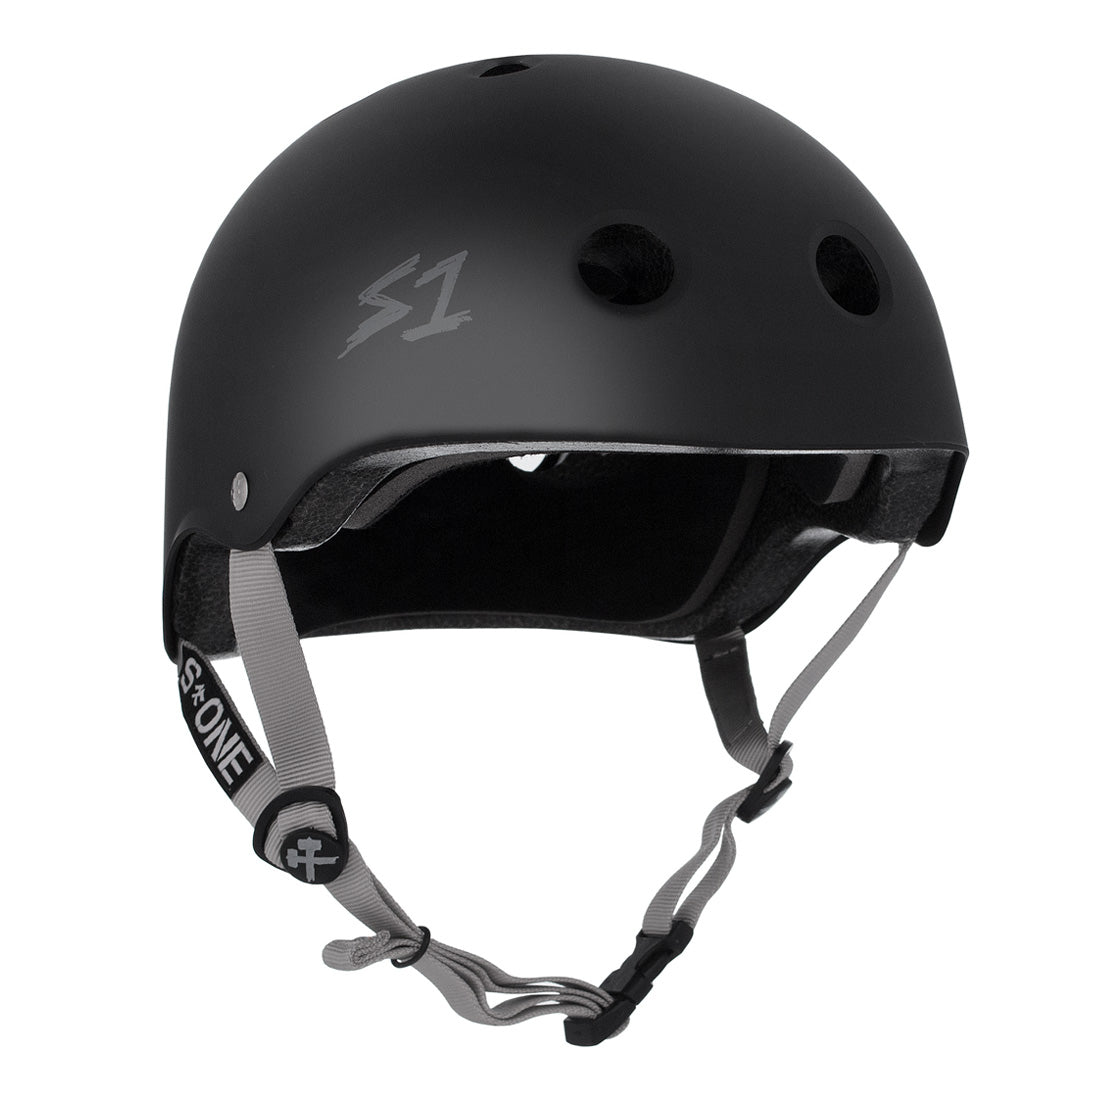 S-One Lifer Helmet - Black/Grey Matte Helmets